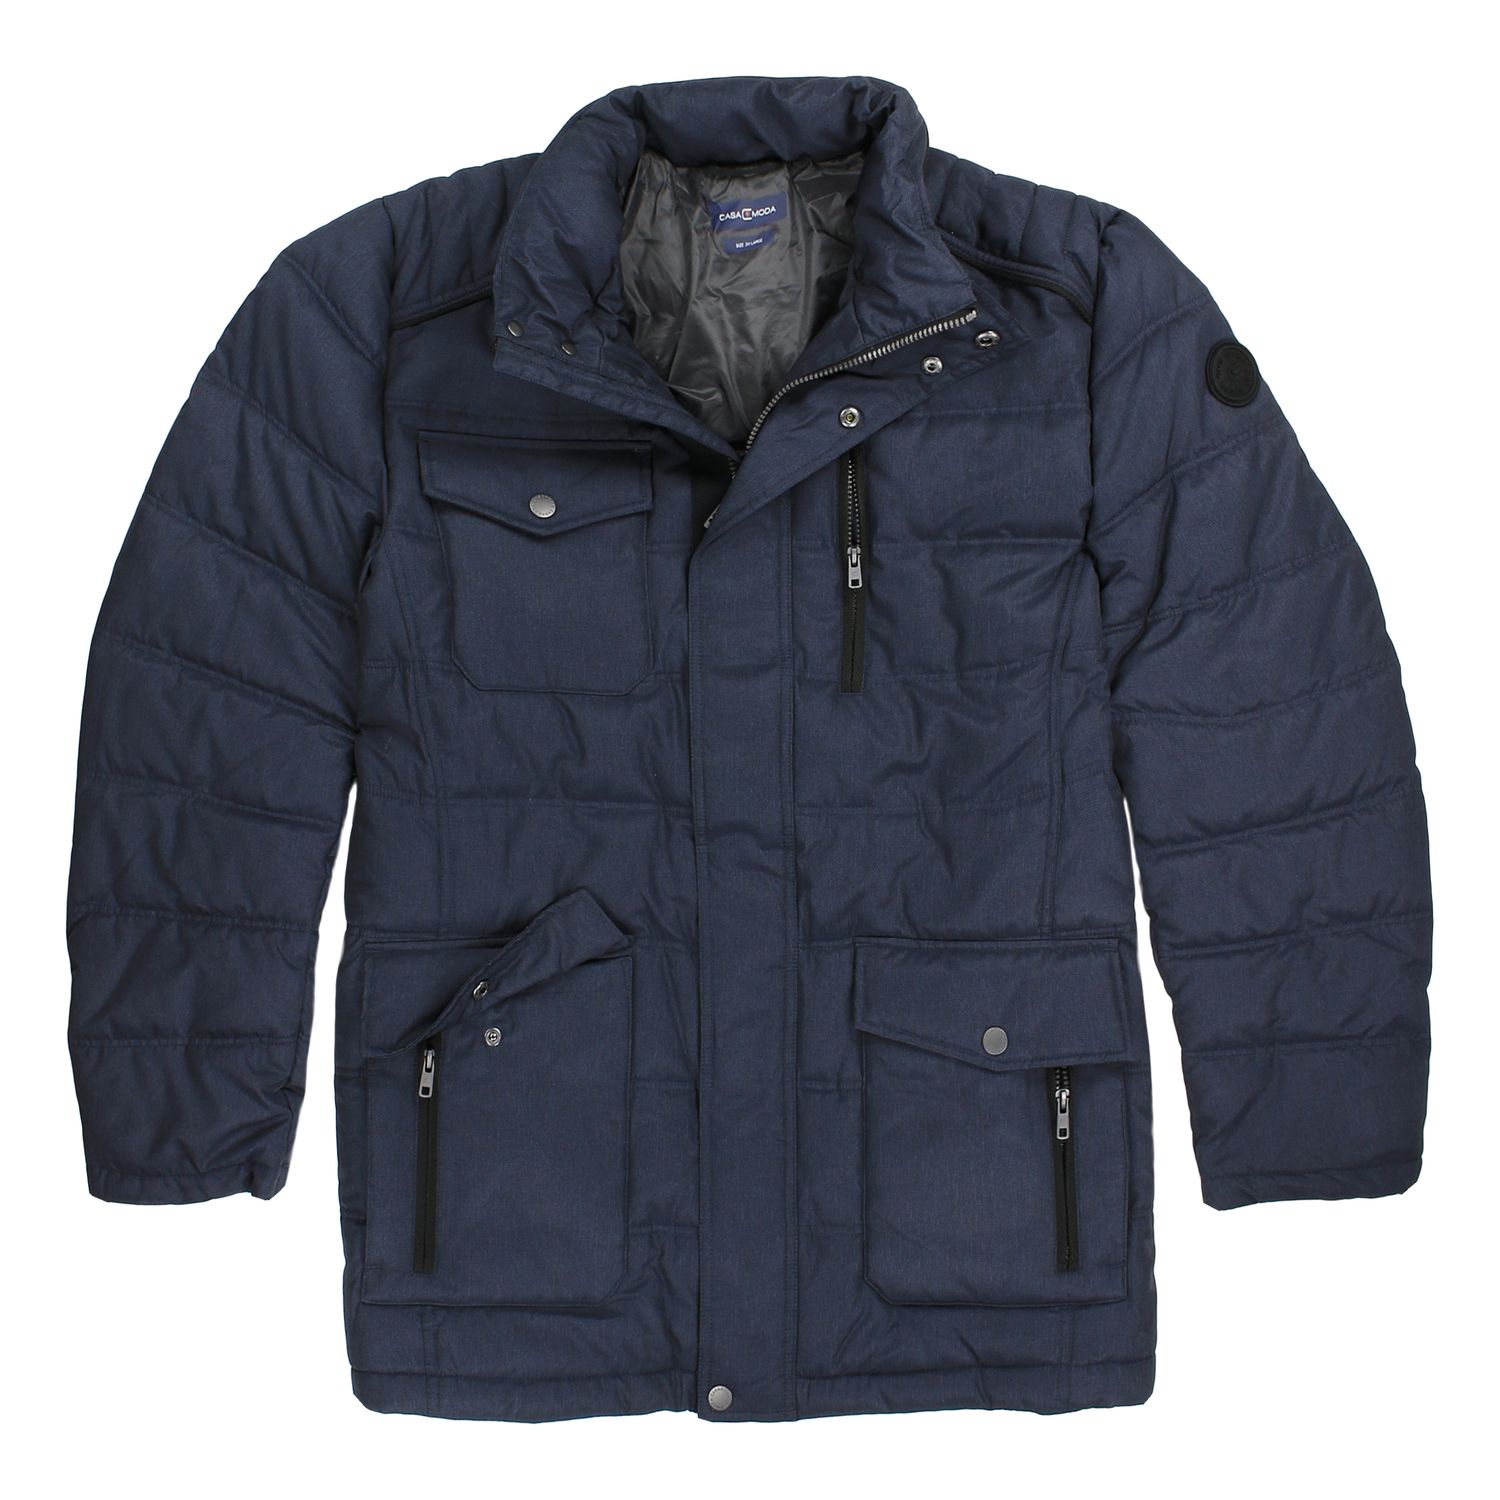 Winter jacket for men in dark blue from Casamoda in oversizes up to 6XL 